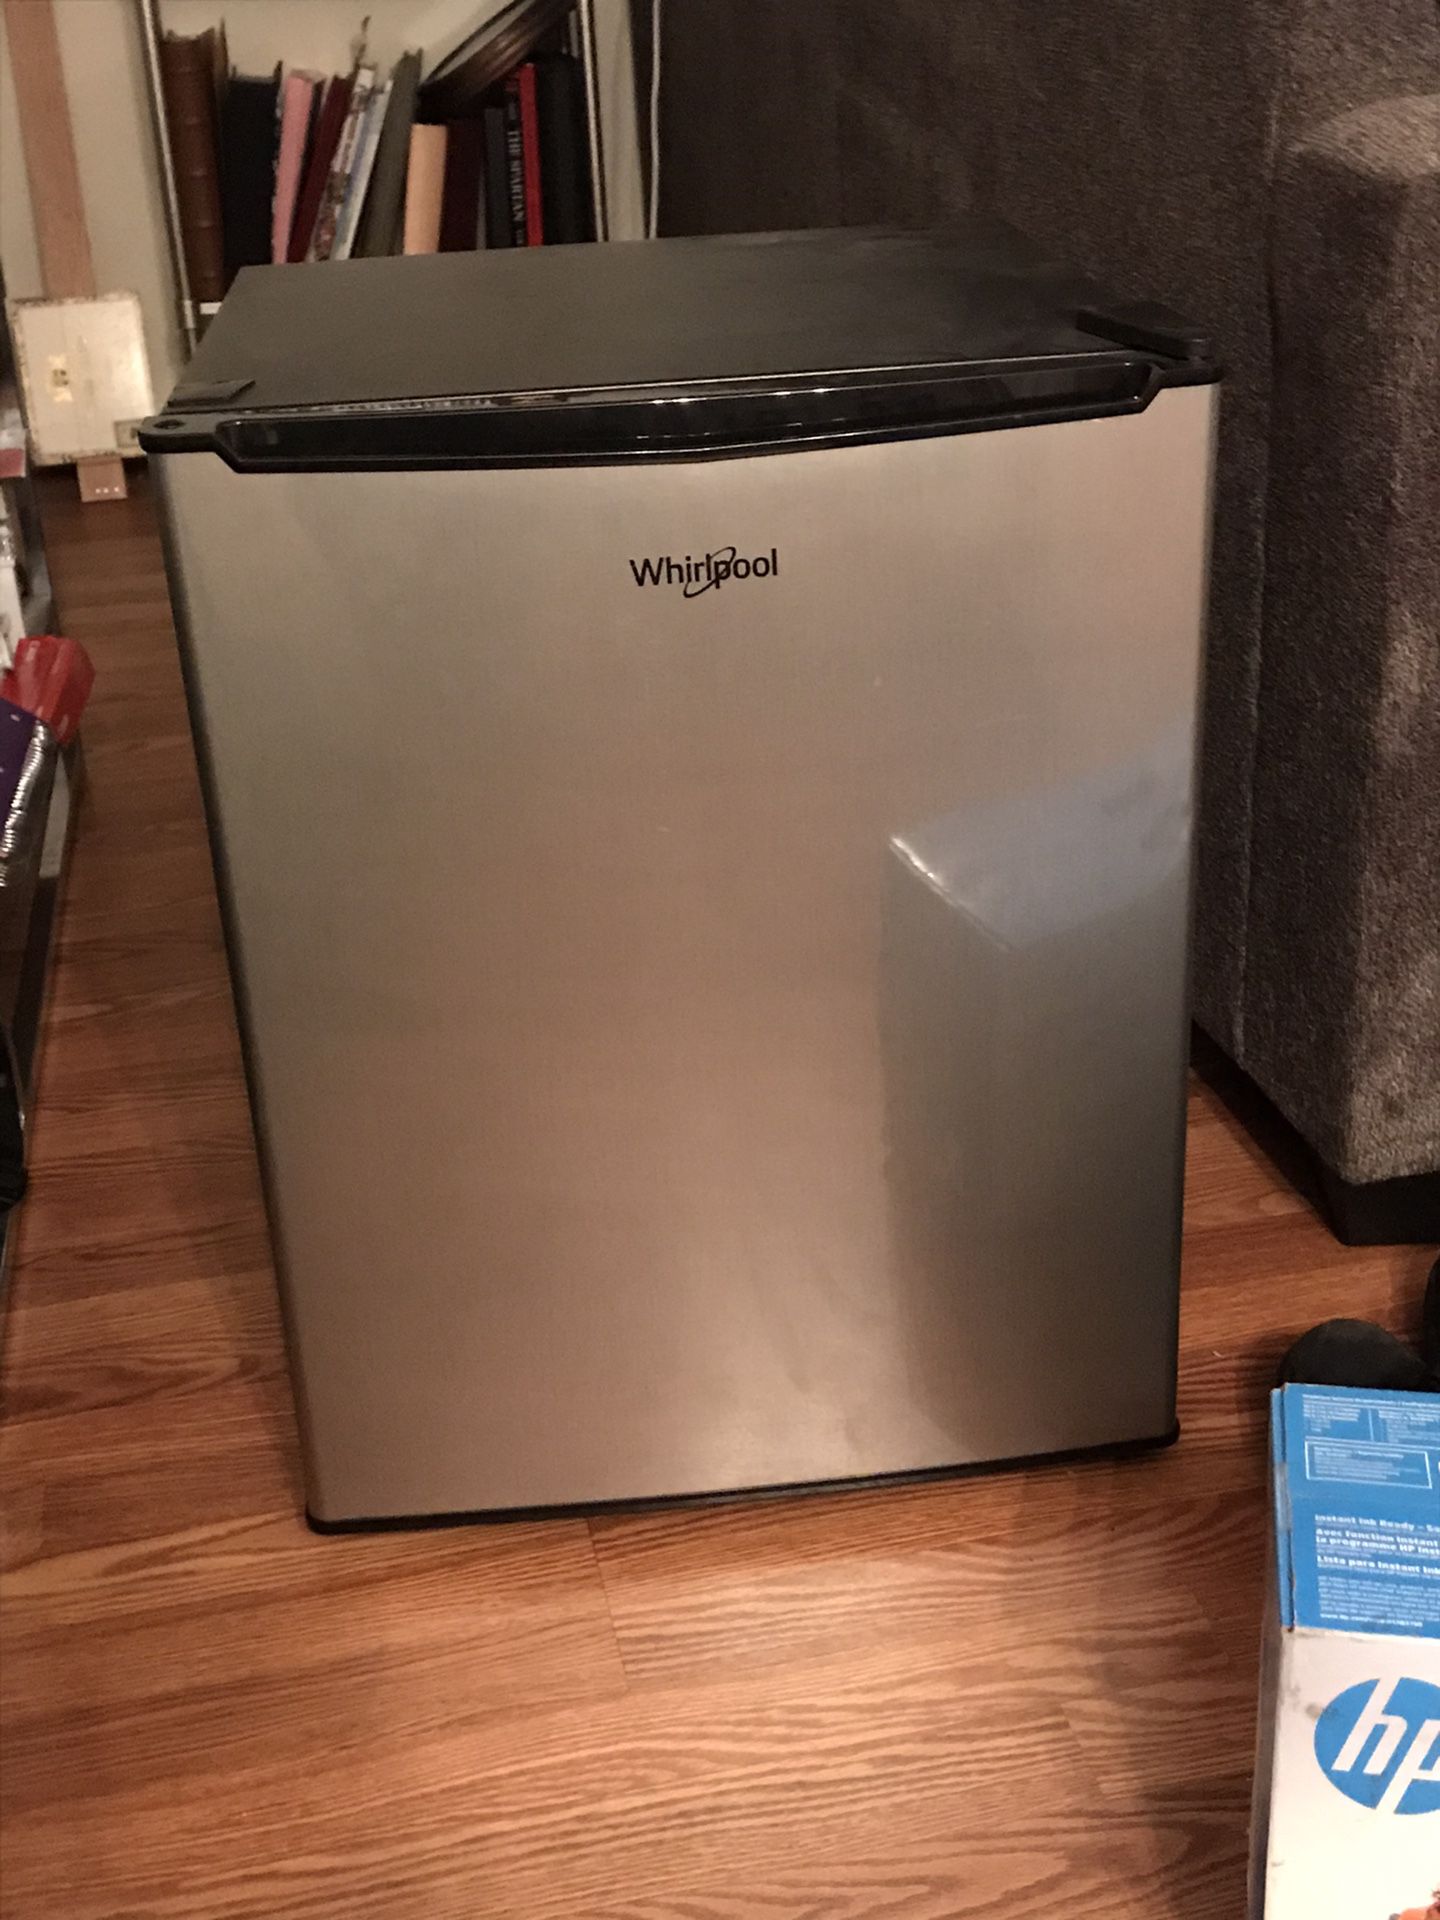 Whirlpool. Mini refrigerator